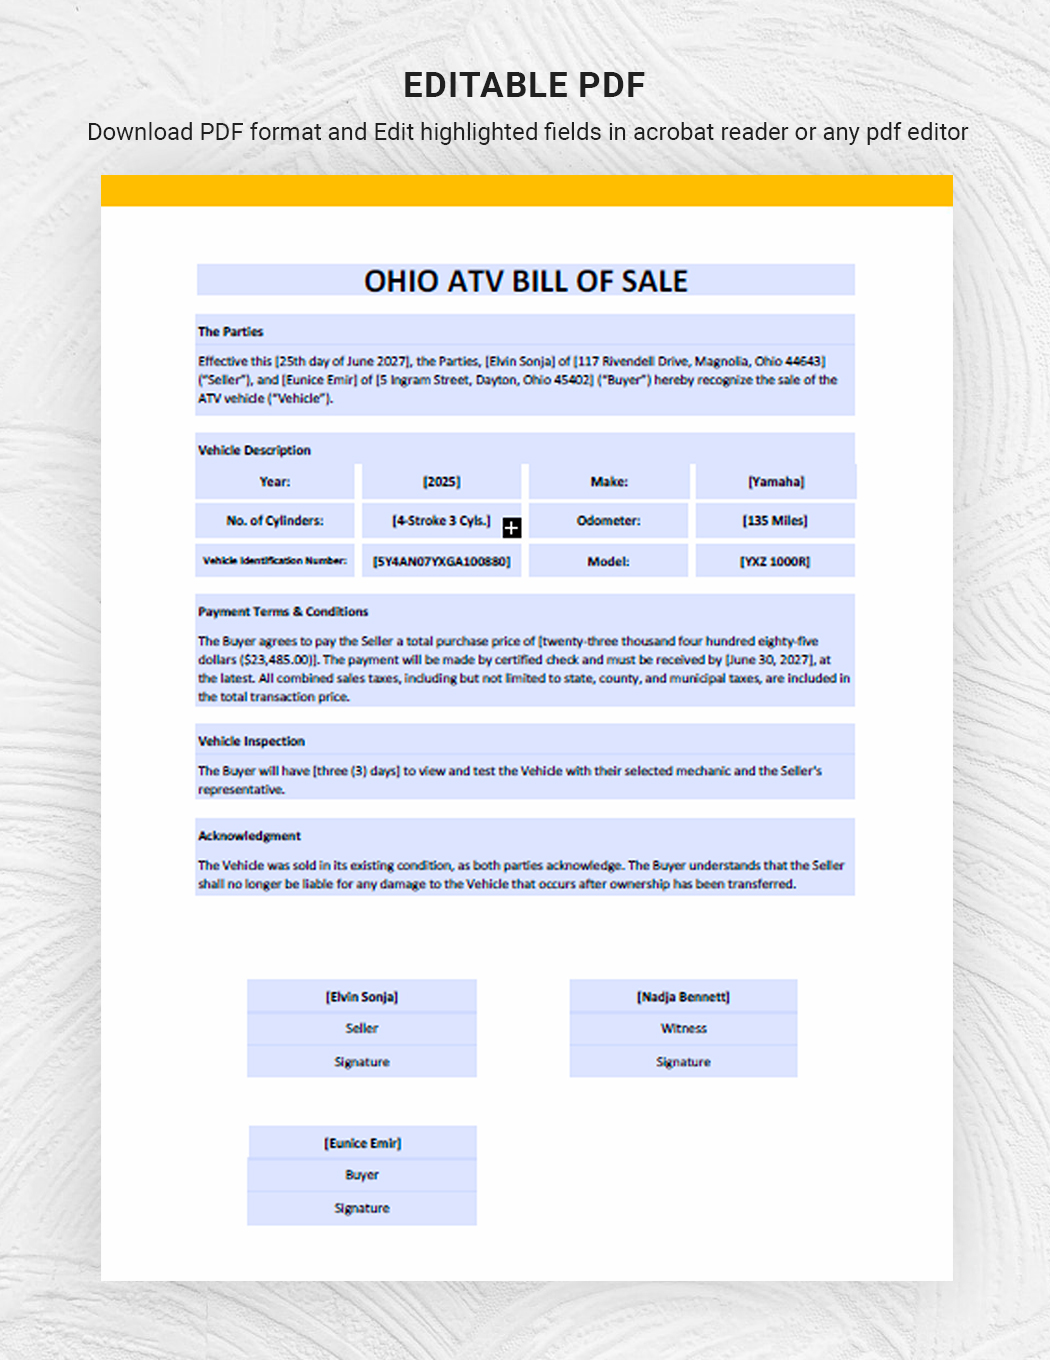 Ohio ATV Bill of Sale Template